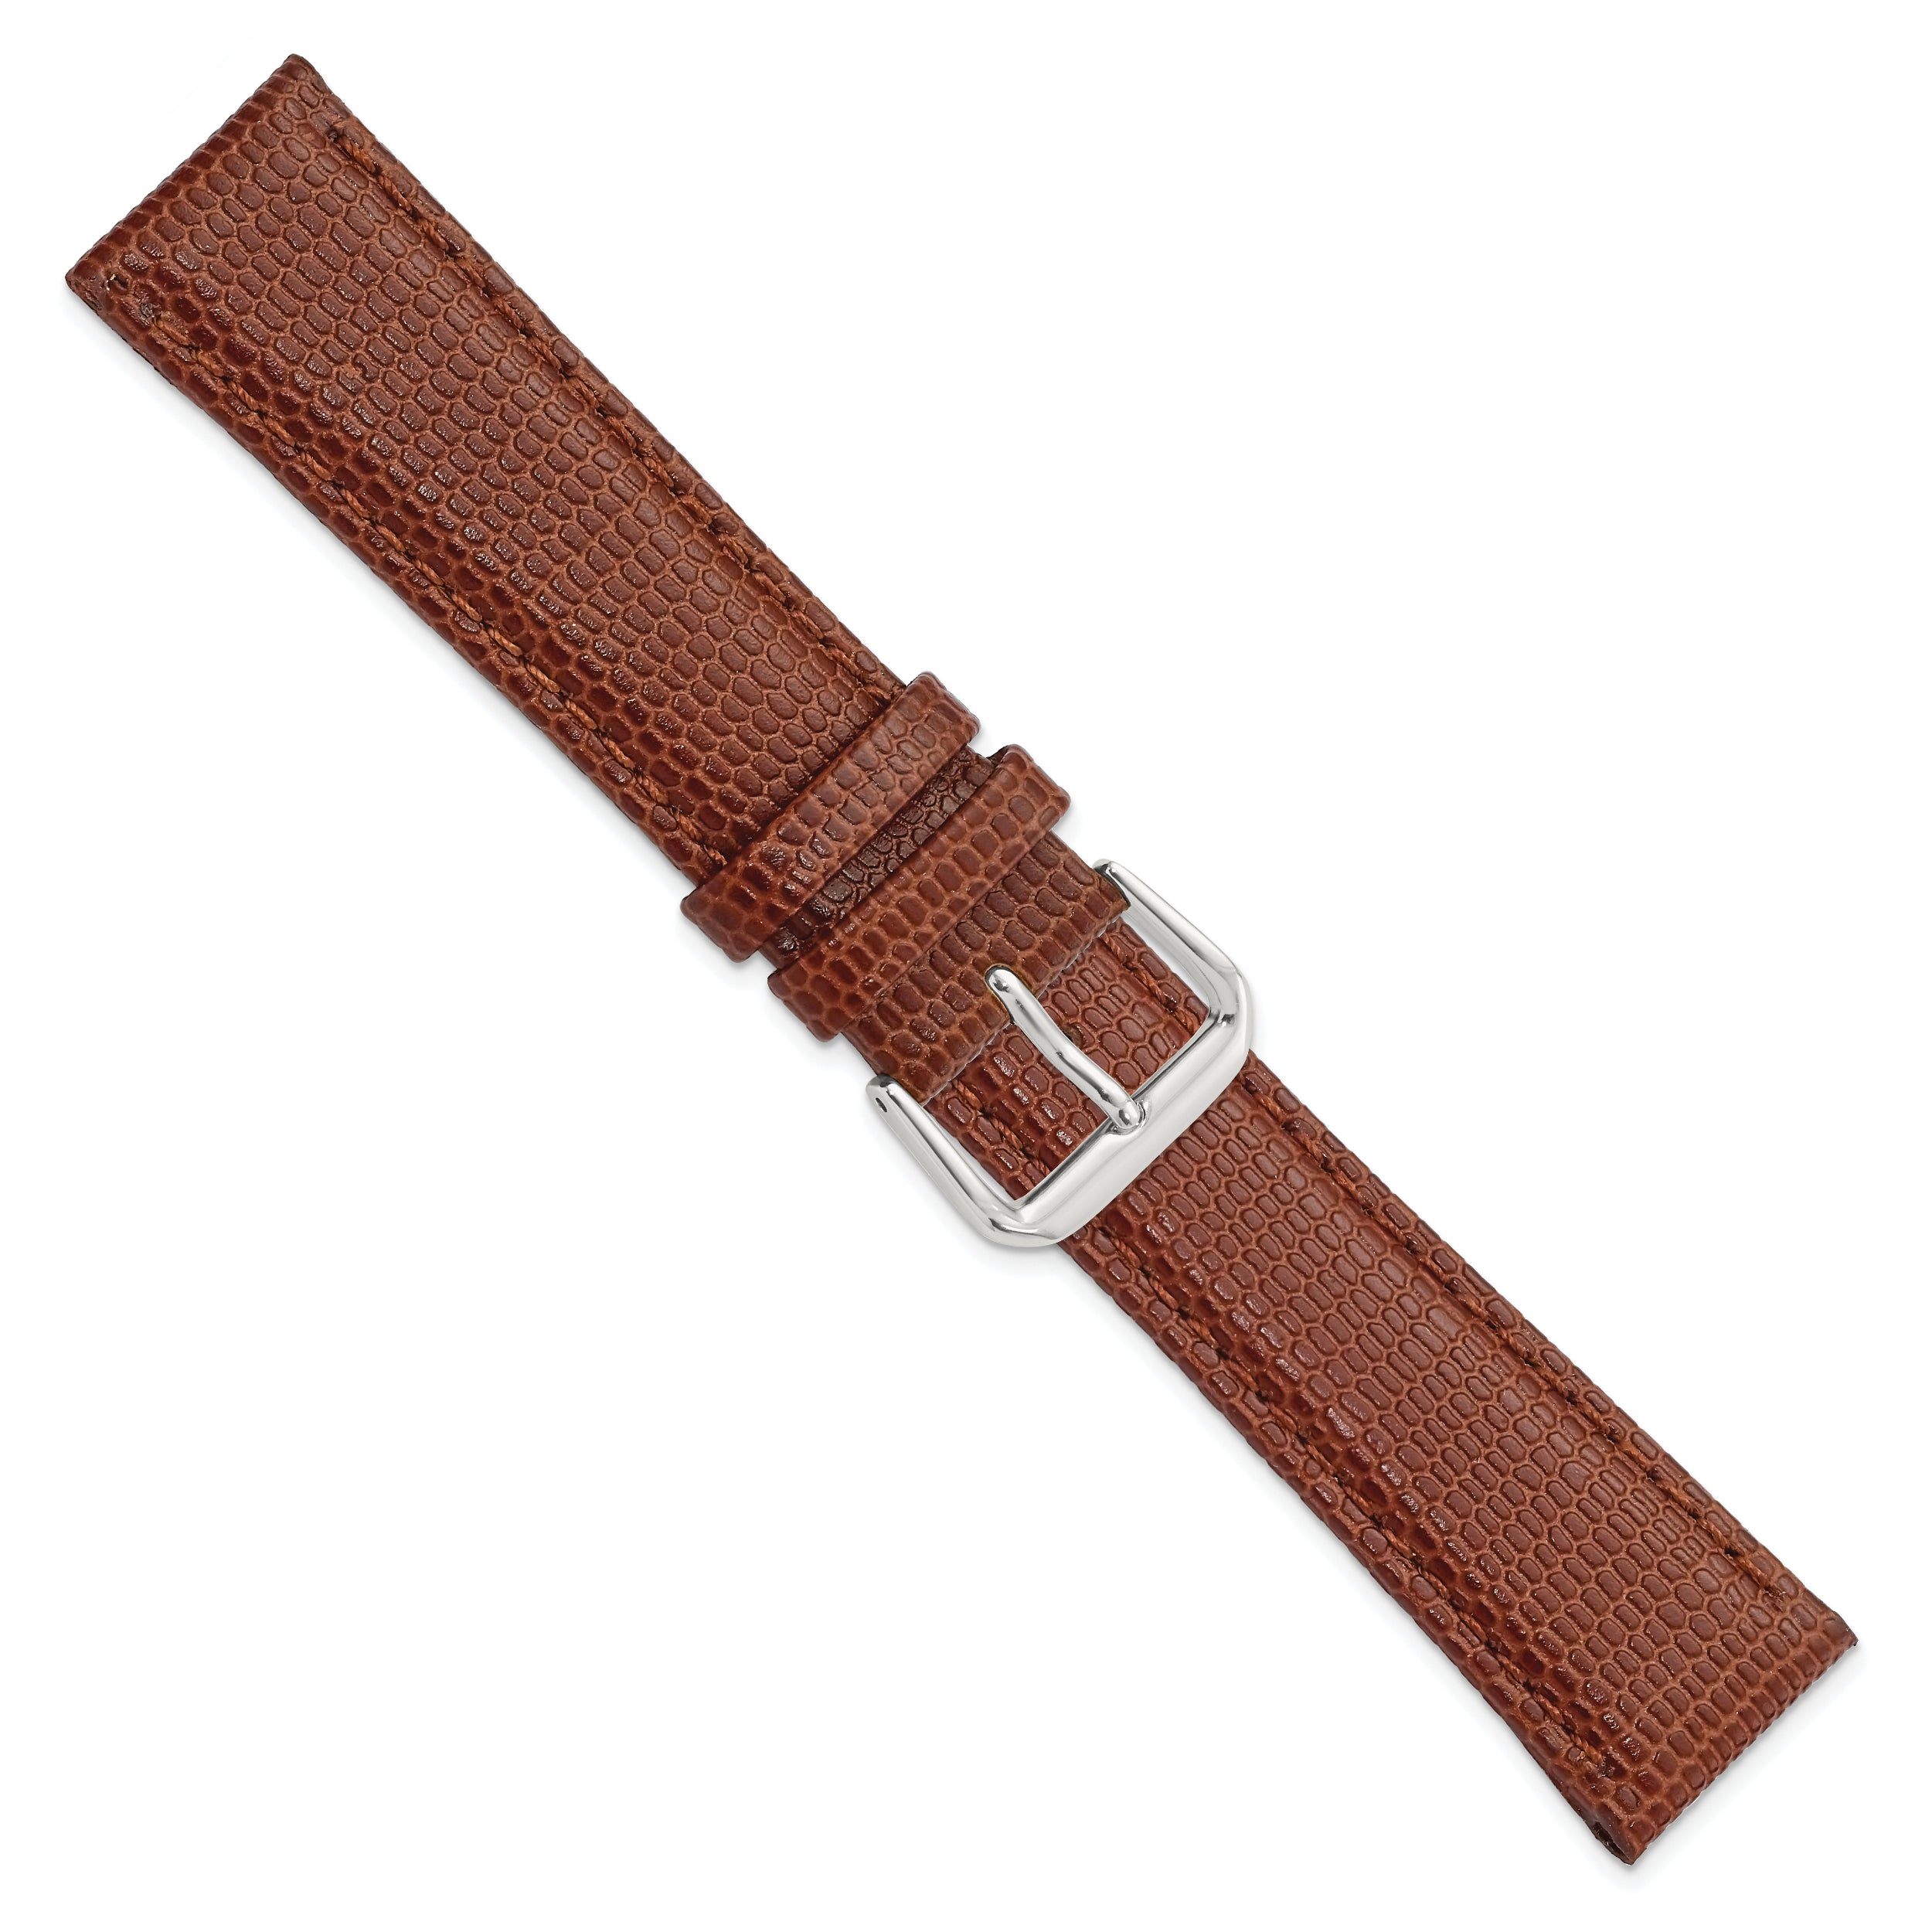 12mm Havana Lizard Grain Leather with Silver-tone Buckle 6.75 inch Watch Band